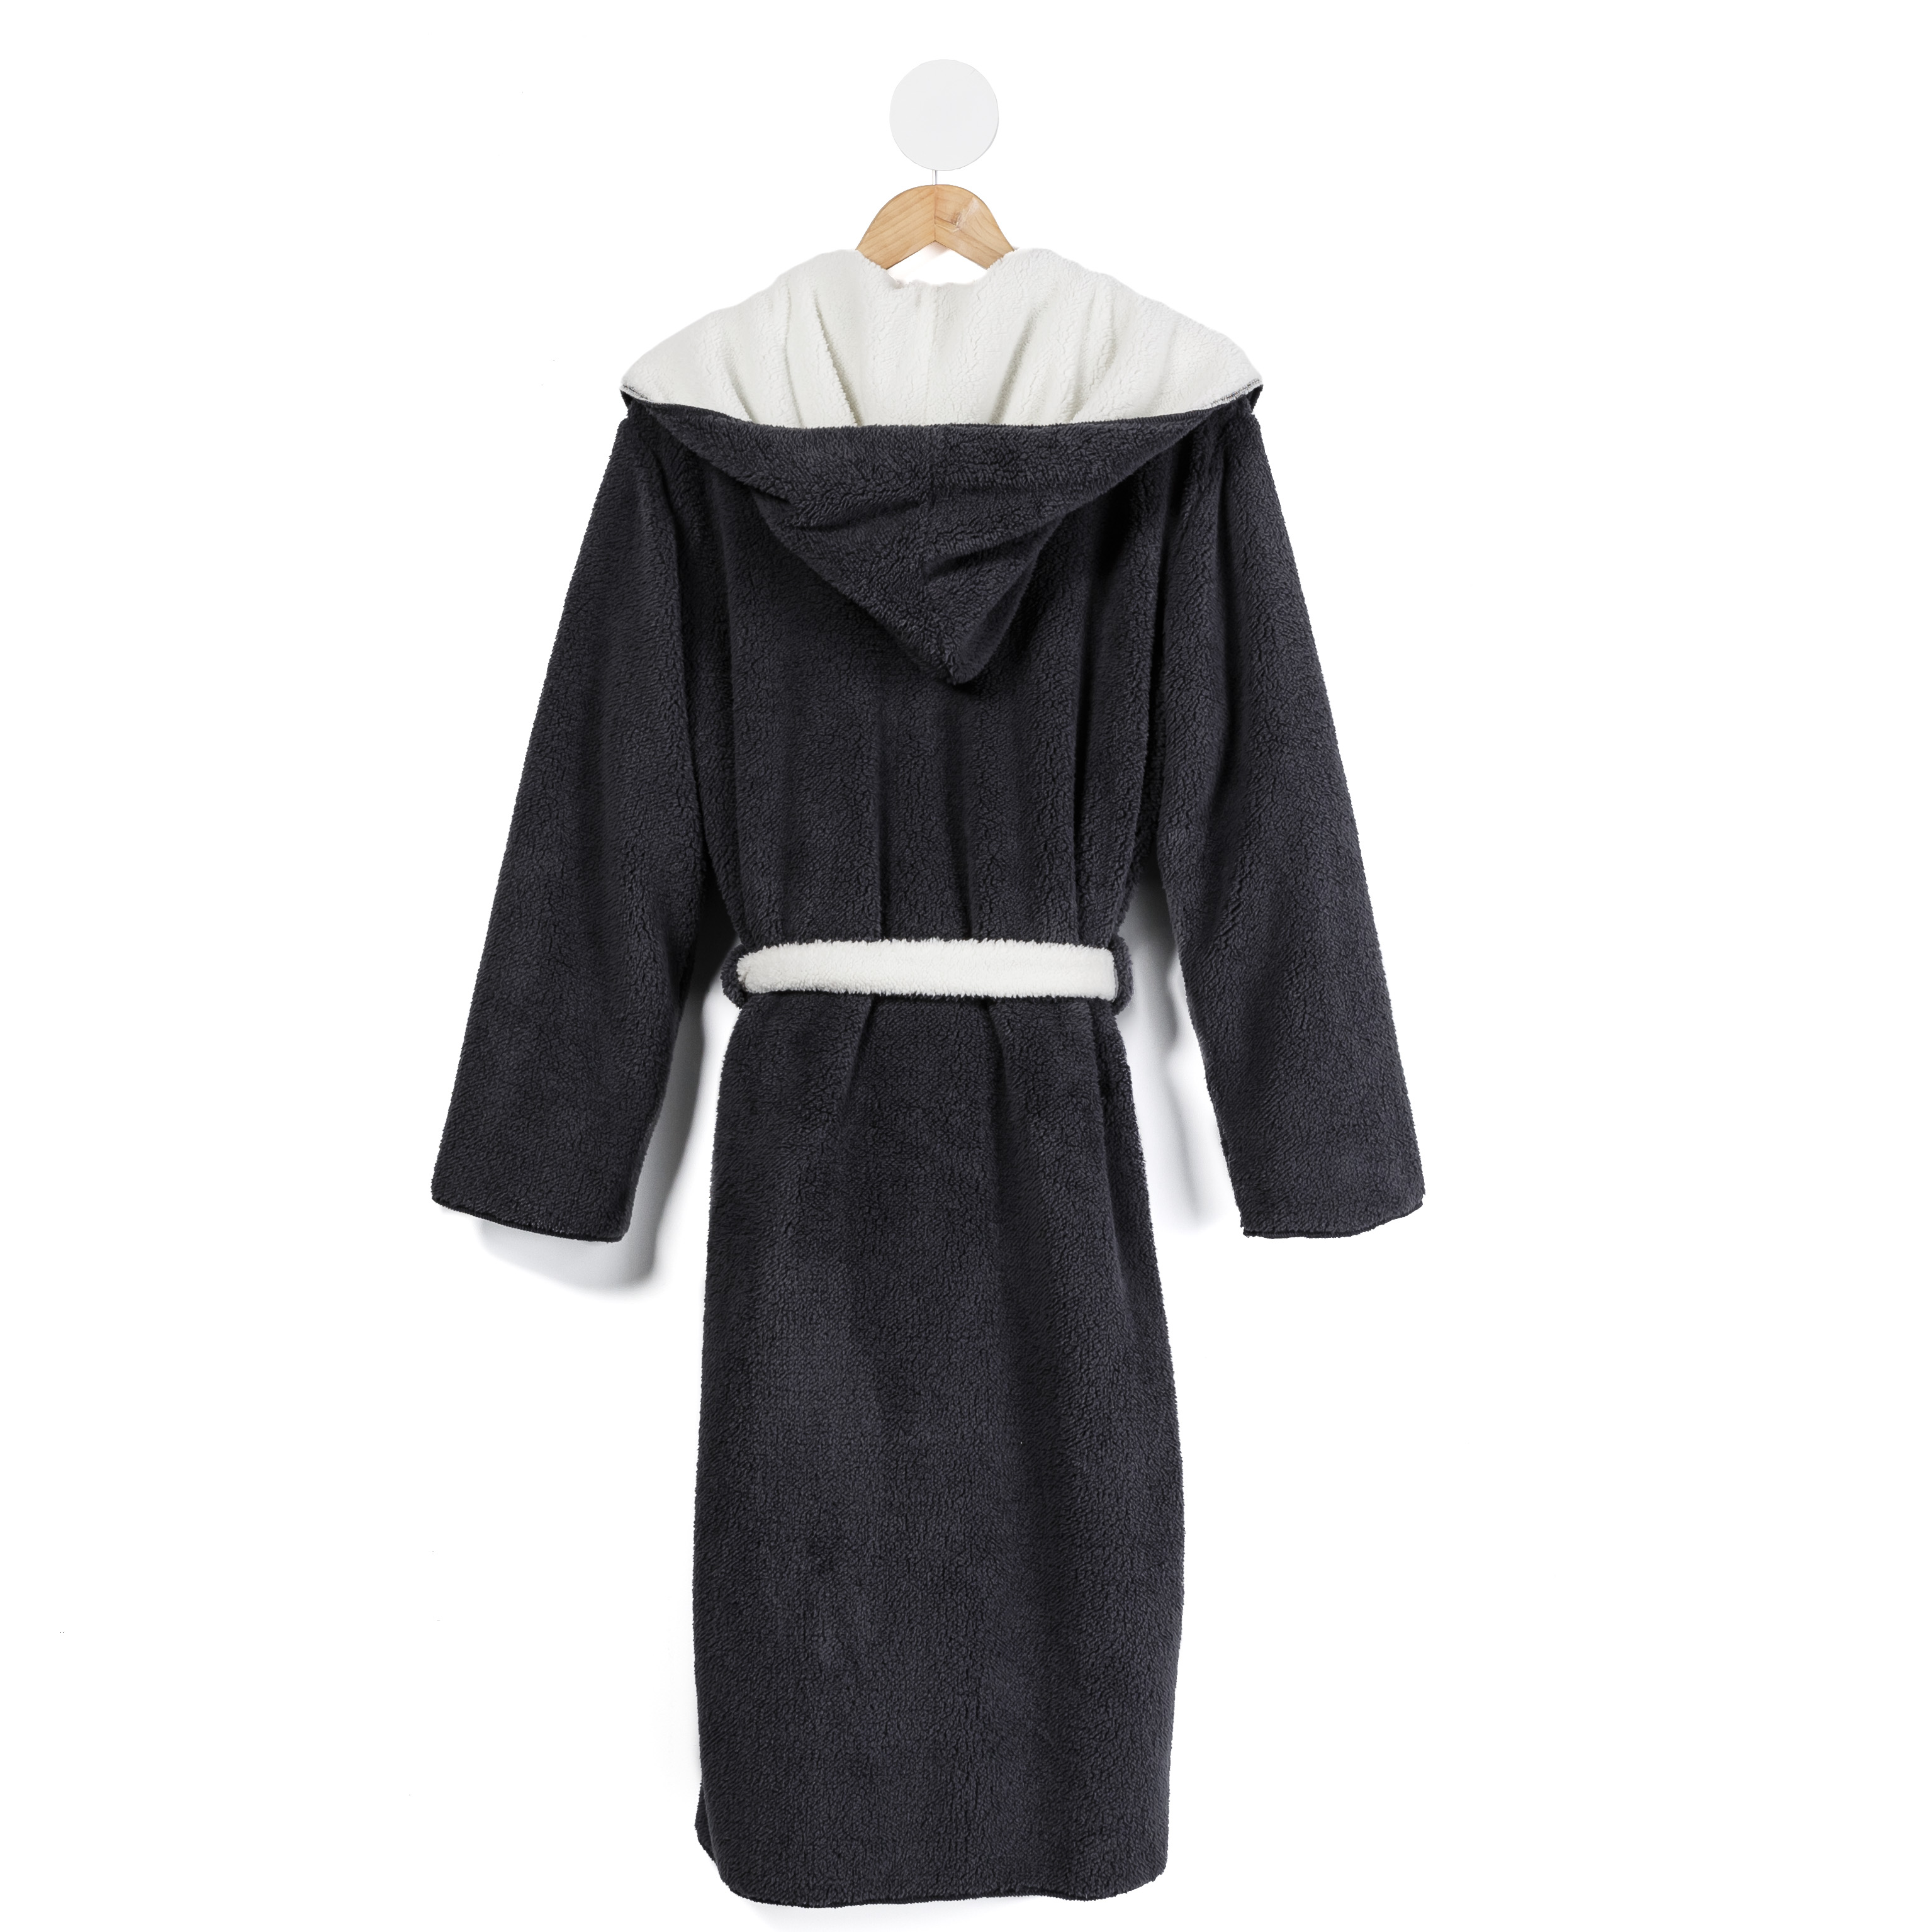 Sherpa Coal Hooded Bathrobe - Bathroom - Bath Robes - Adairs Online